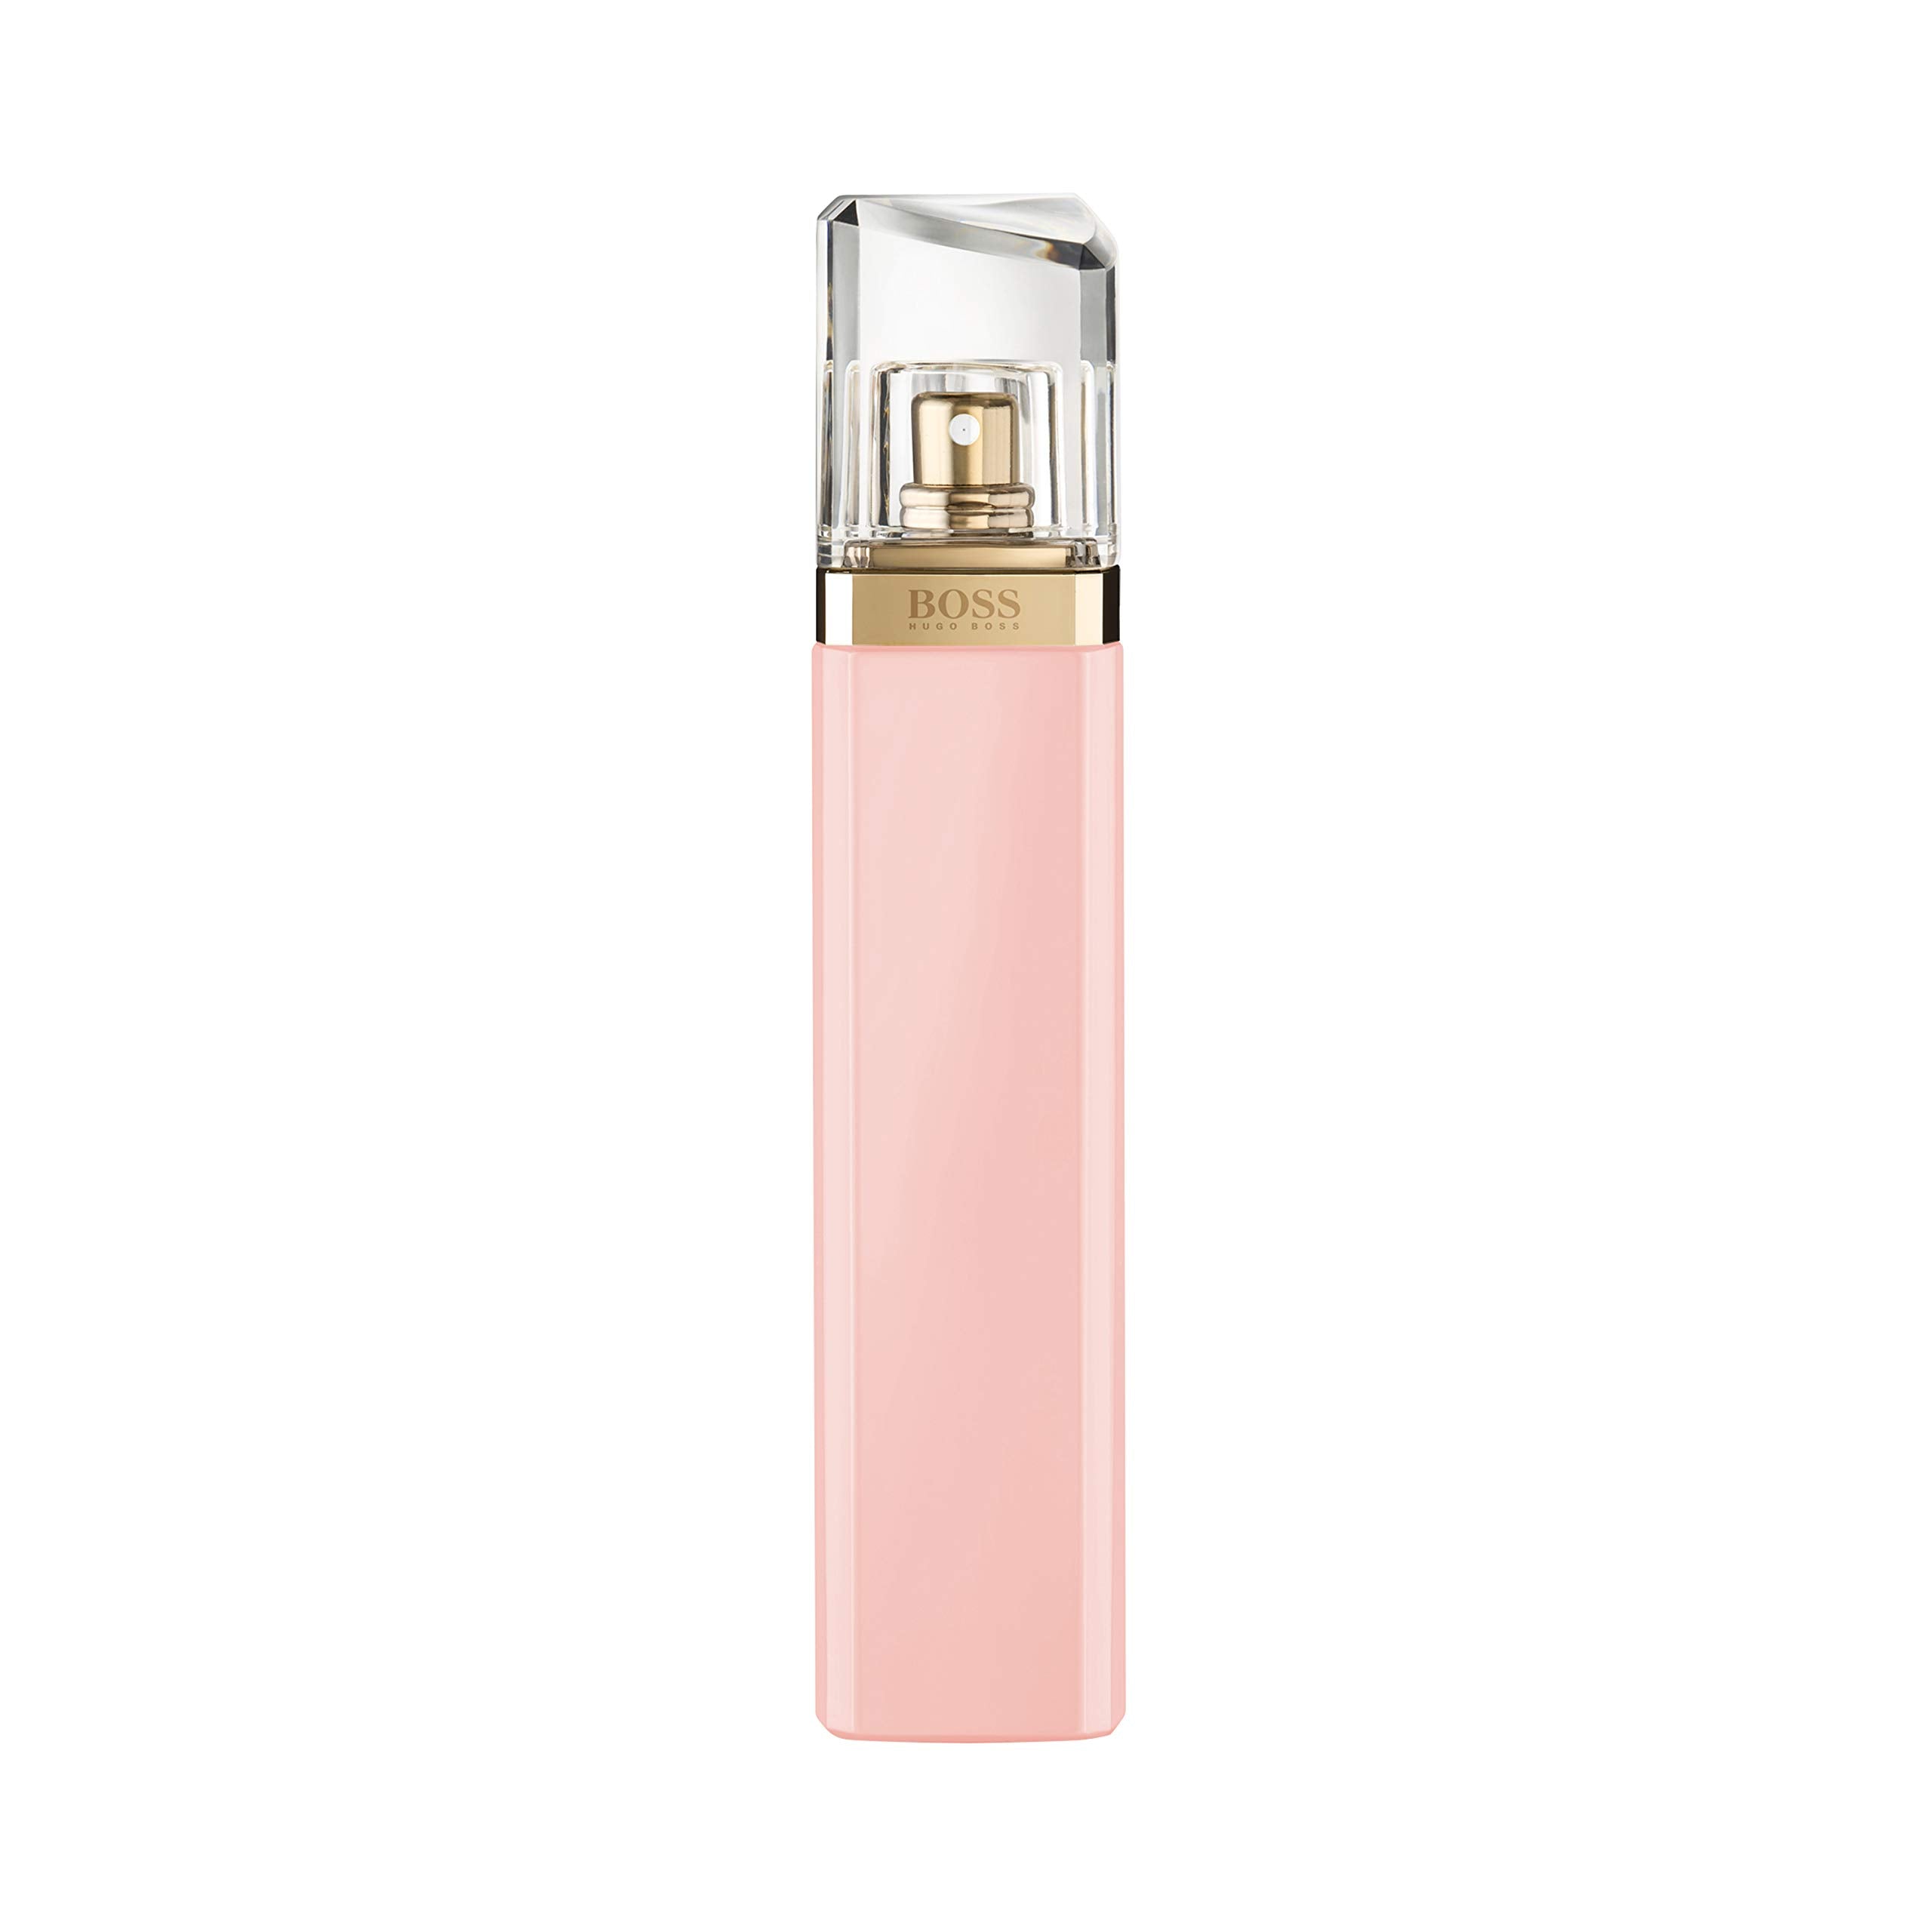 Hugo Boss Boss Ma Vie Pour Femme for Women - Eau de Parfum, 75ml